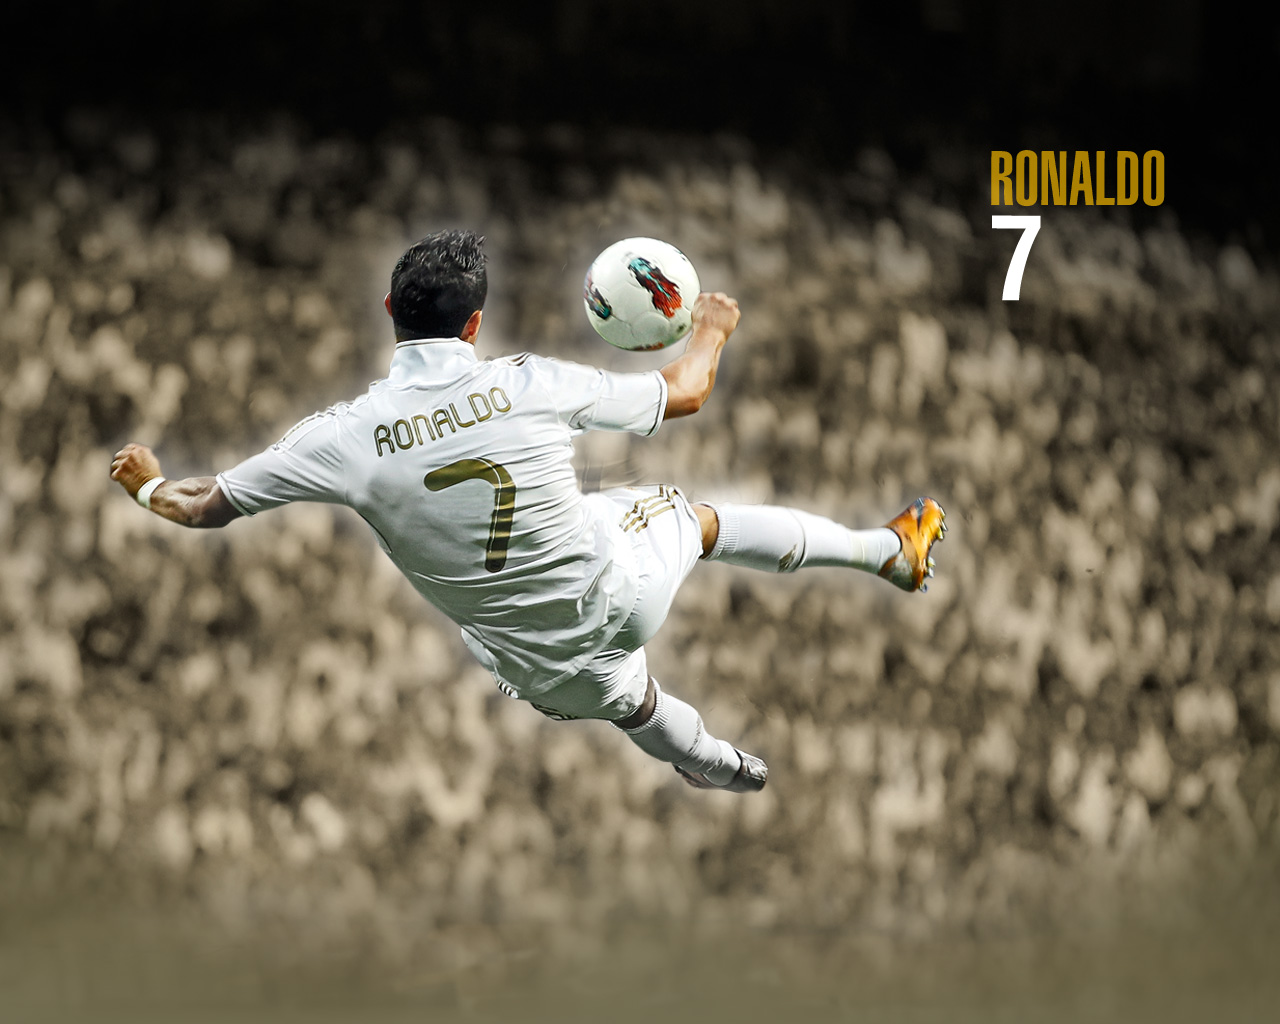 https://blogger.googleusercontent.com/img/b/R29vZ2xl/AVvXsEjj3ttFh0_ce2eFF2zlLrJRvJVX2iVkc2ZLXw3HhHe7O7cqXrL2To2wr5PK4WyB7iJH89PkfOOEZQYGWtzE31M2LEibRfoy6OAI91PuMa6YxKPw9jIhqeT7FjCOP4wCp0vp1gGy_7bhSBPB/s1600/Cristiano+Ronaldo+HD+Wallpapers+2012-2013+13.jpg